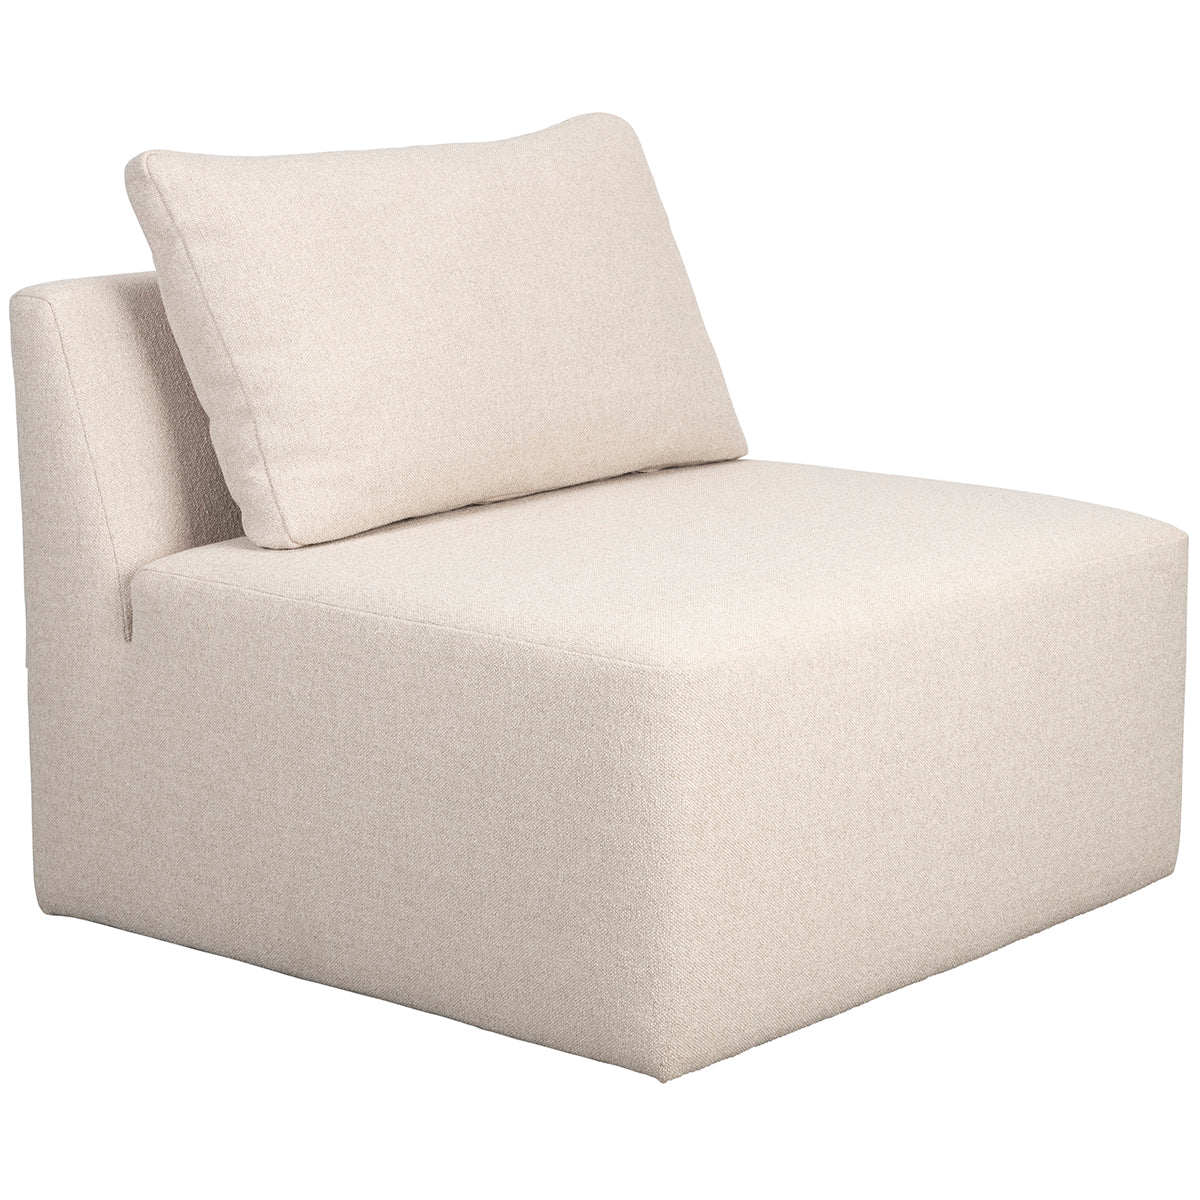 Prosper Sand 1 Seater Sofa